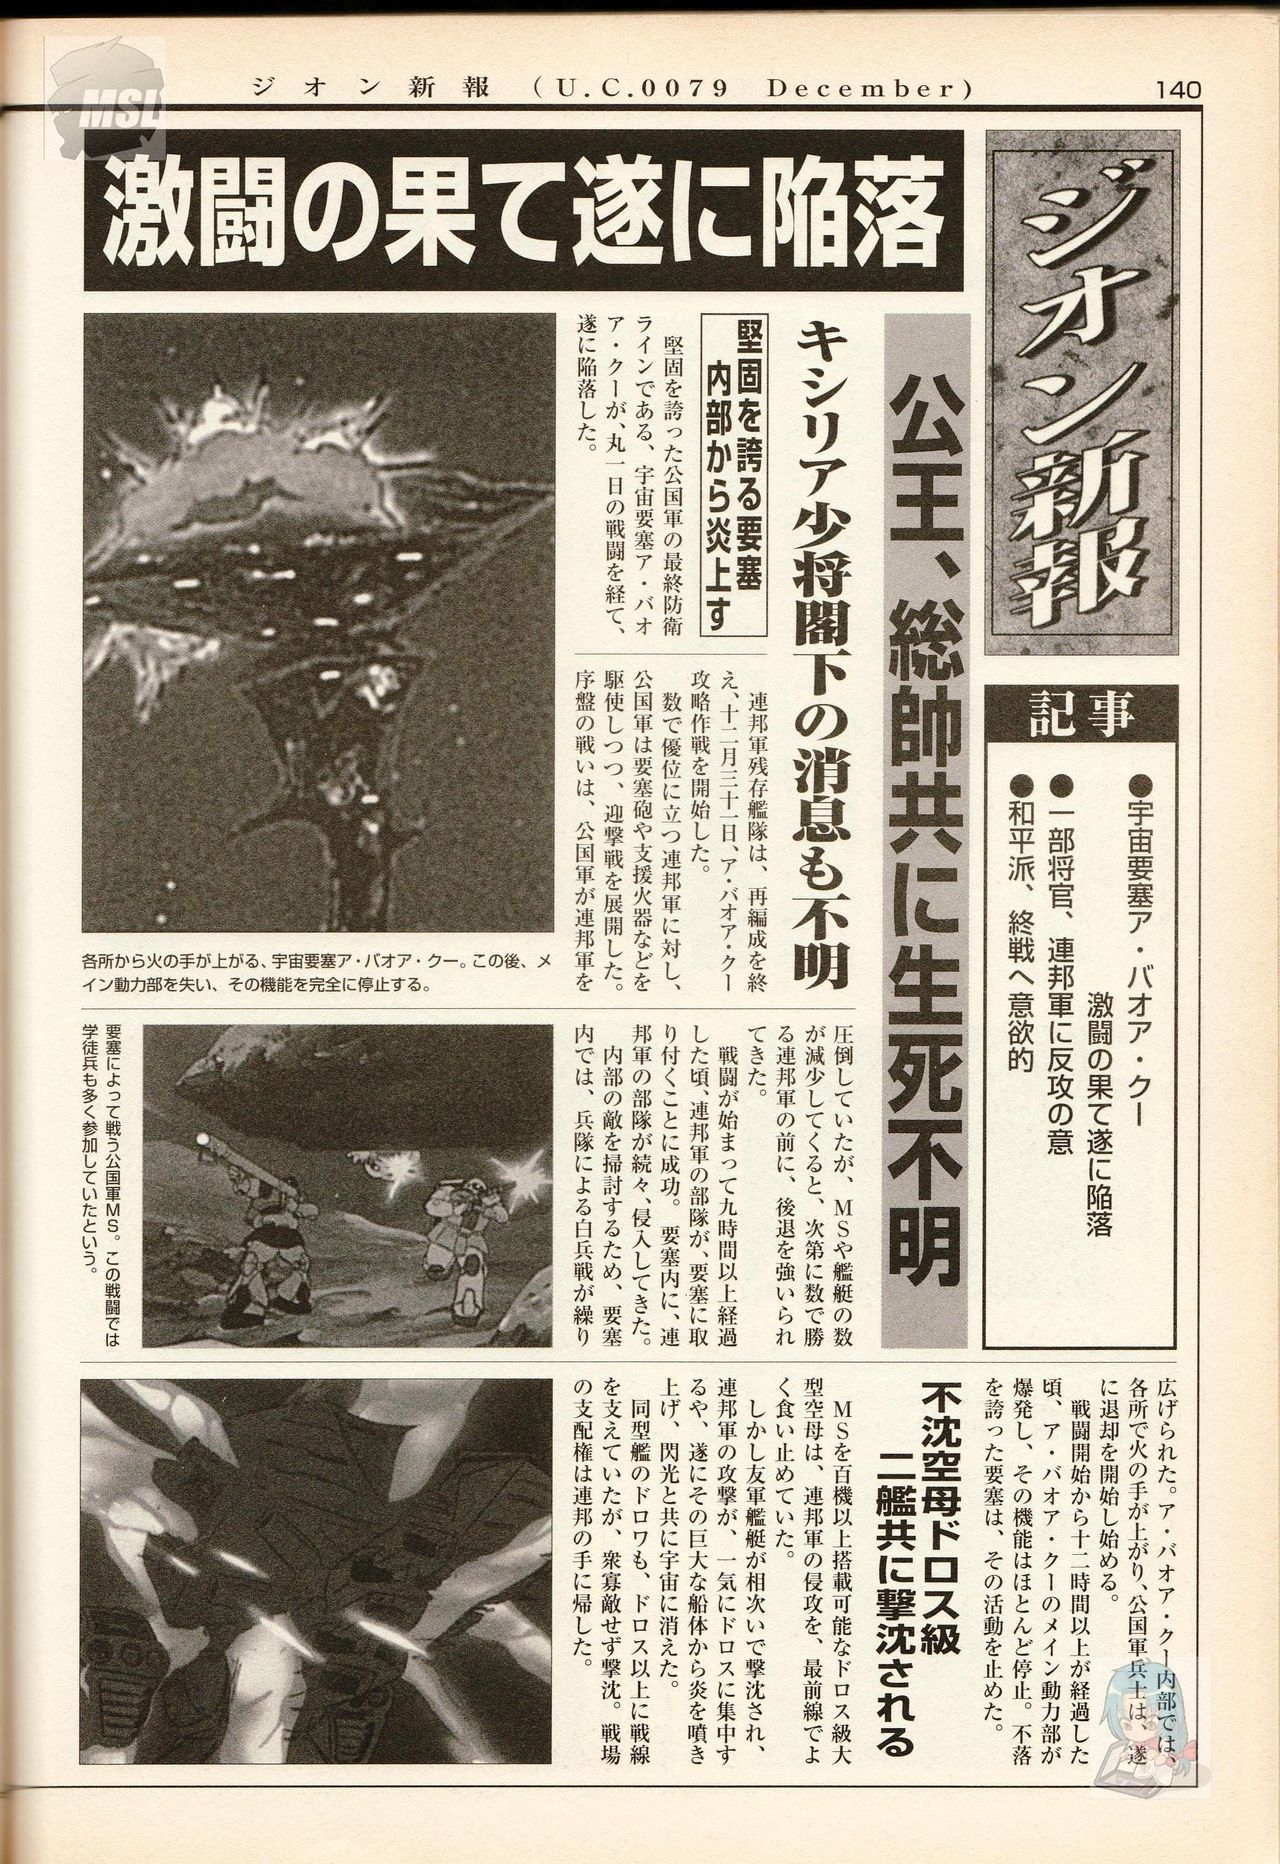 Mobile Suit Gundam - Zeon - Classified Records 143